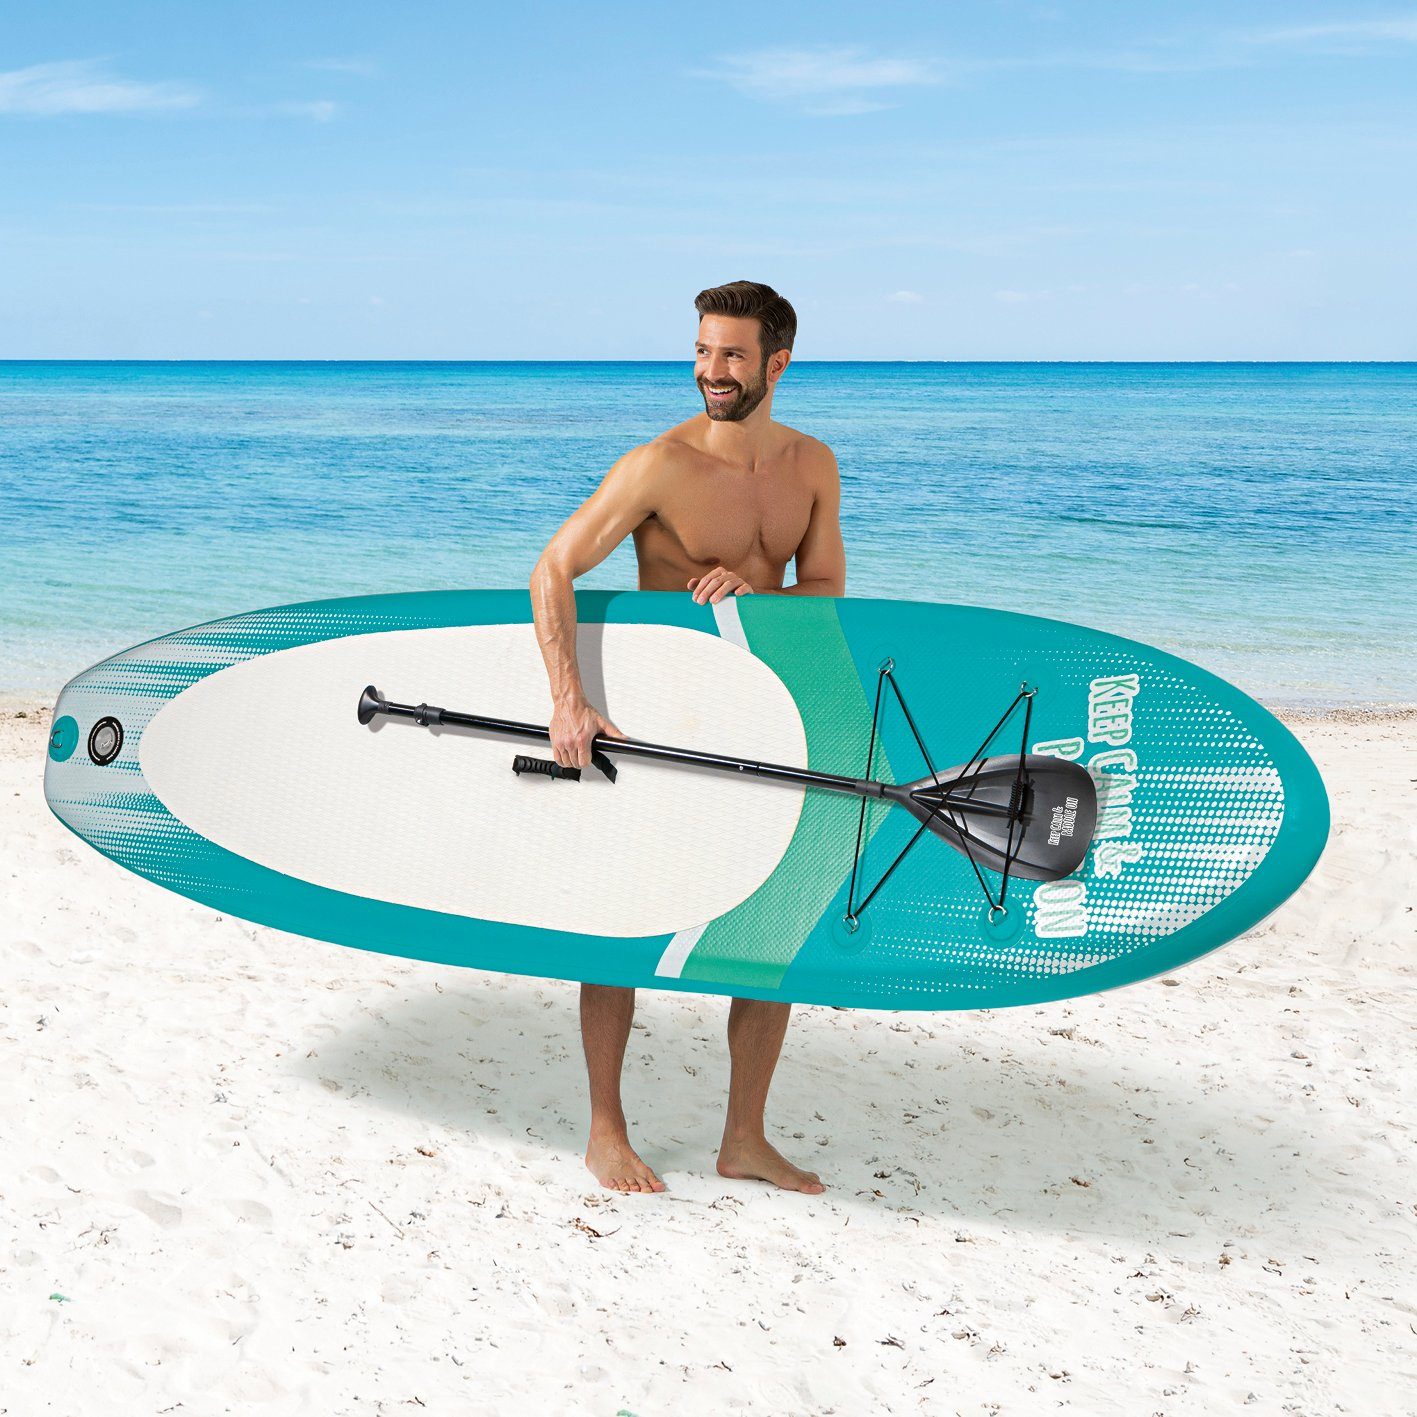 MAXXMEE Inflatable türkis/weiß Board Stand Paddel kg, Stand-Up Komplett inkl. Zubehör, Set Paddling SUP SUP-Board Paddle-Board 300 110 up cm